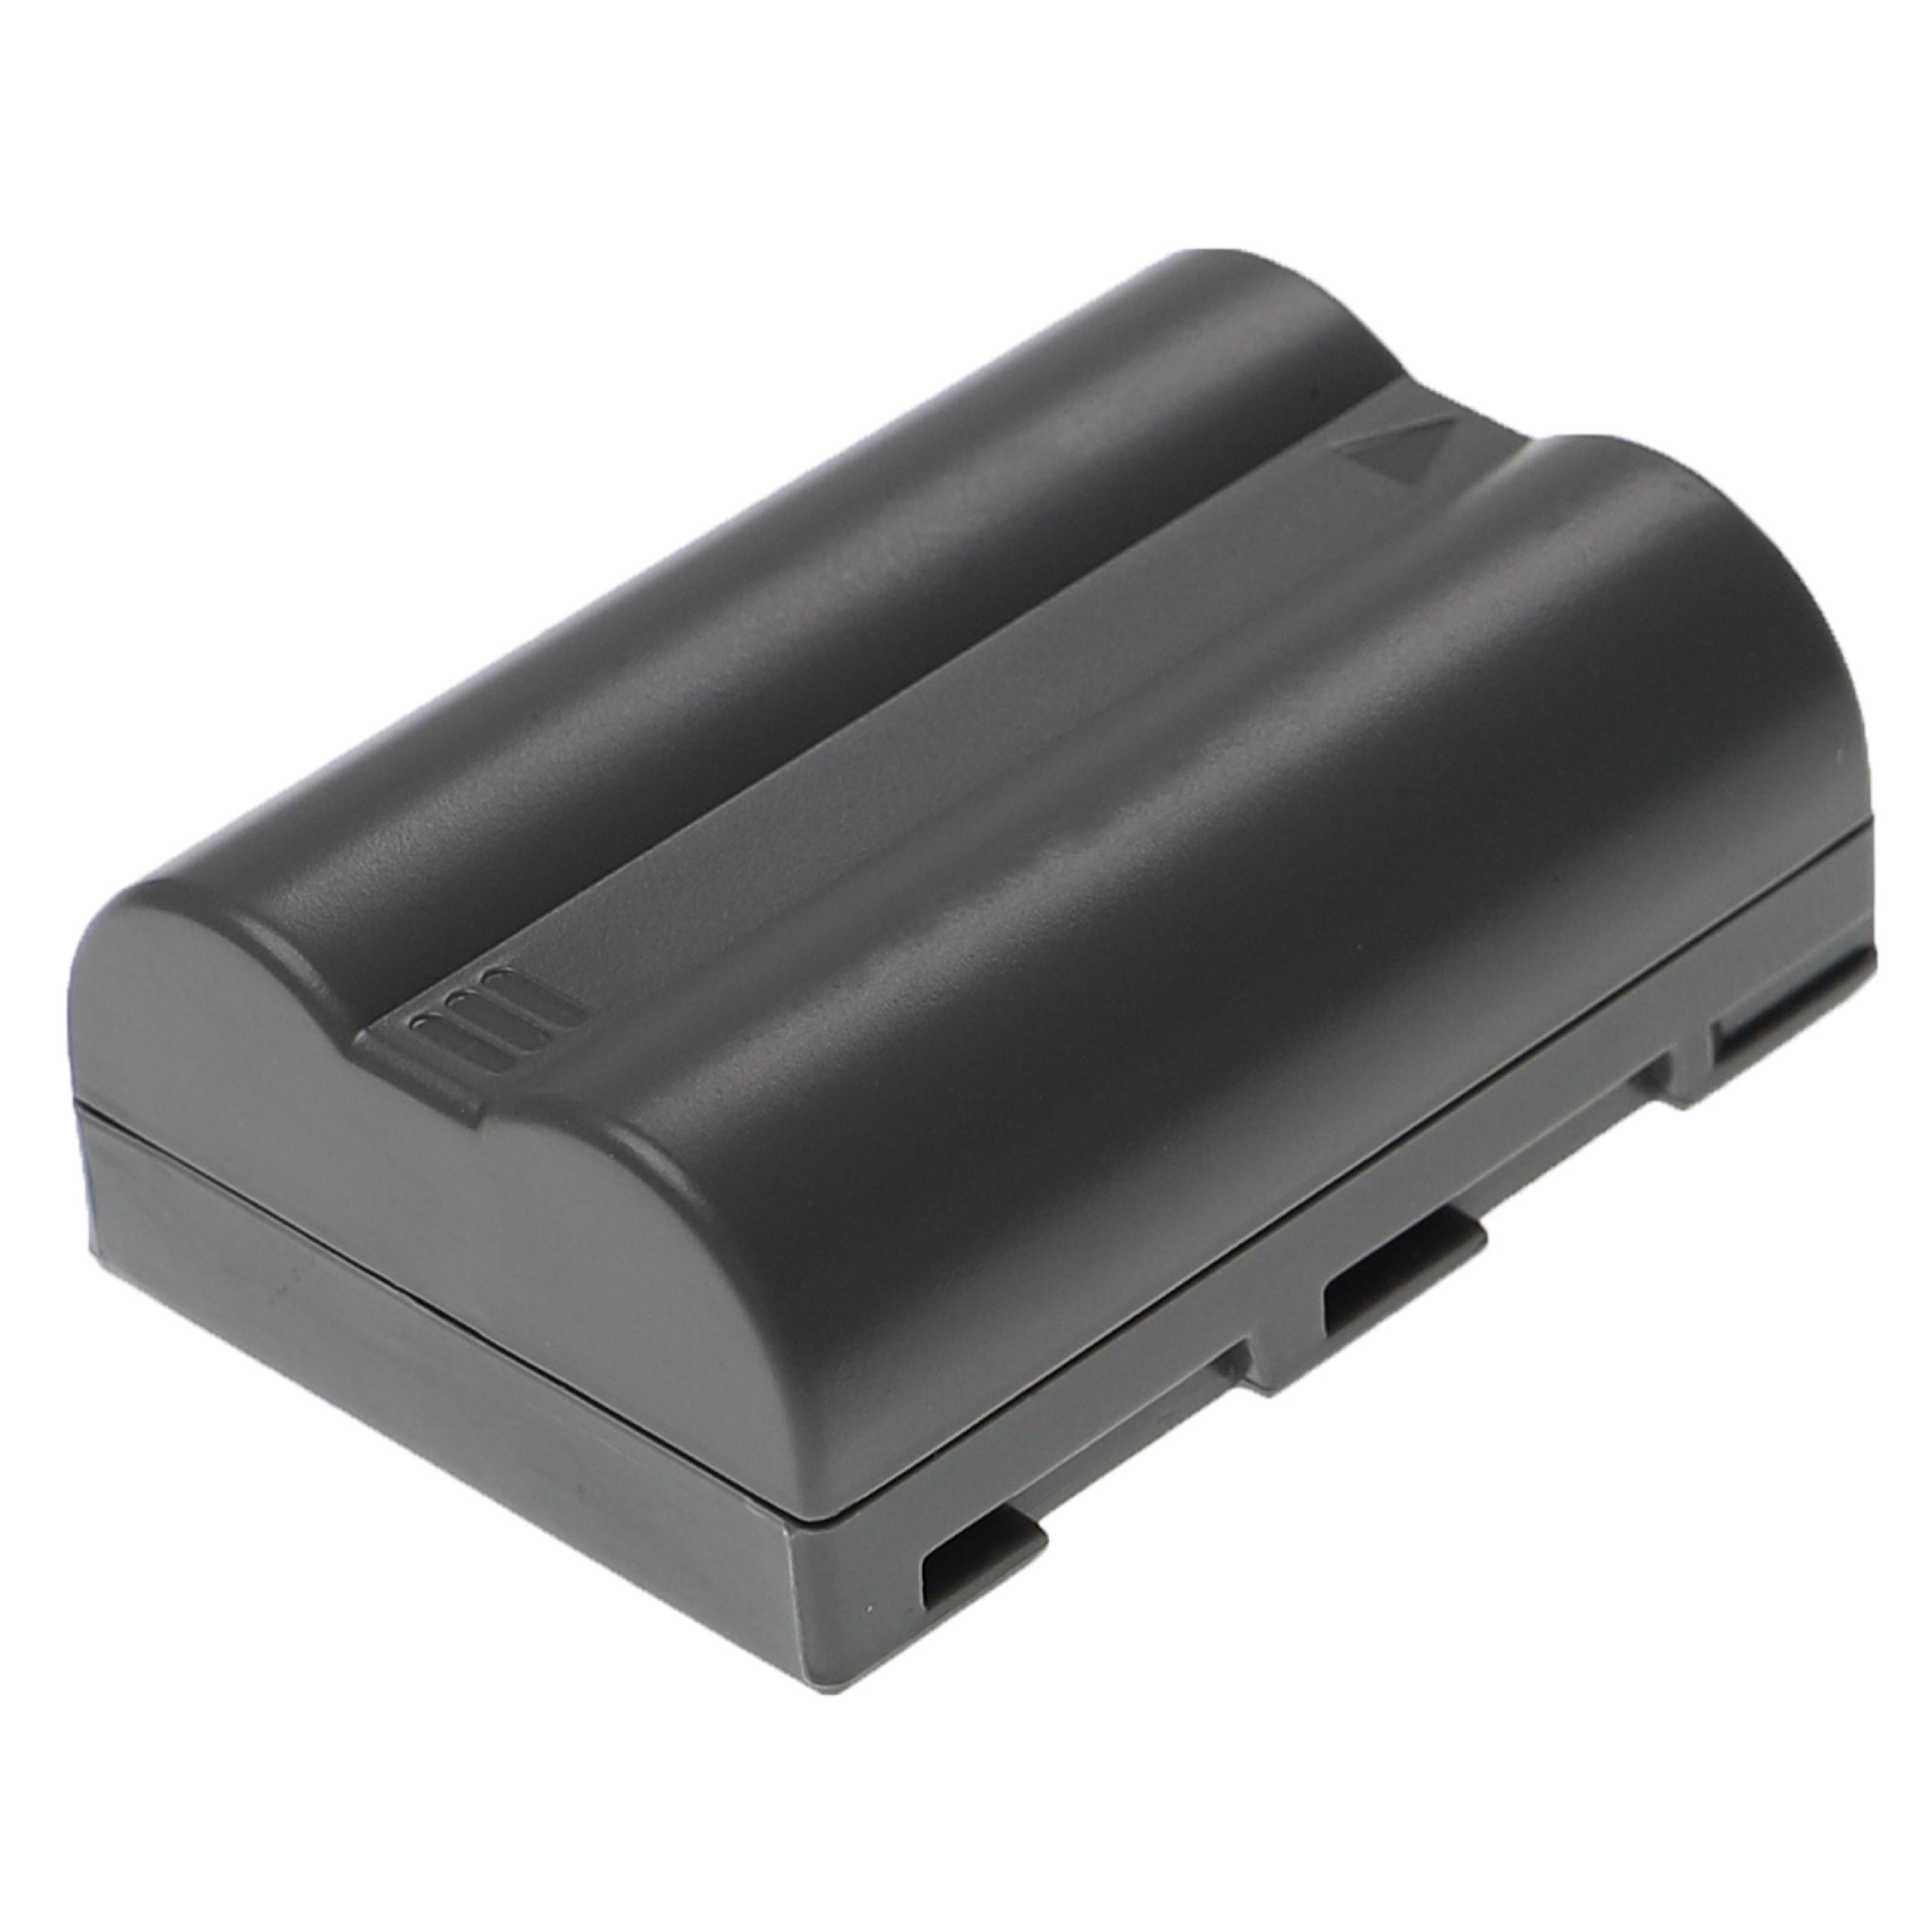 Battery (2 Units) Replacement for Fujifilm BC-150, NP-150 - 1900mAh, 7.4V, Li-Ion